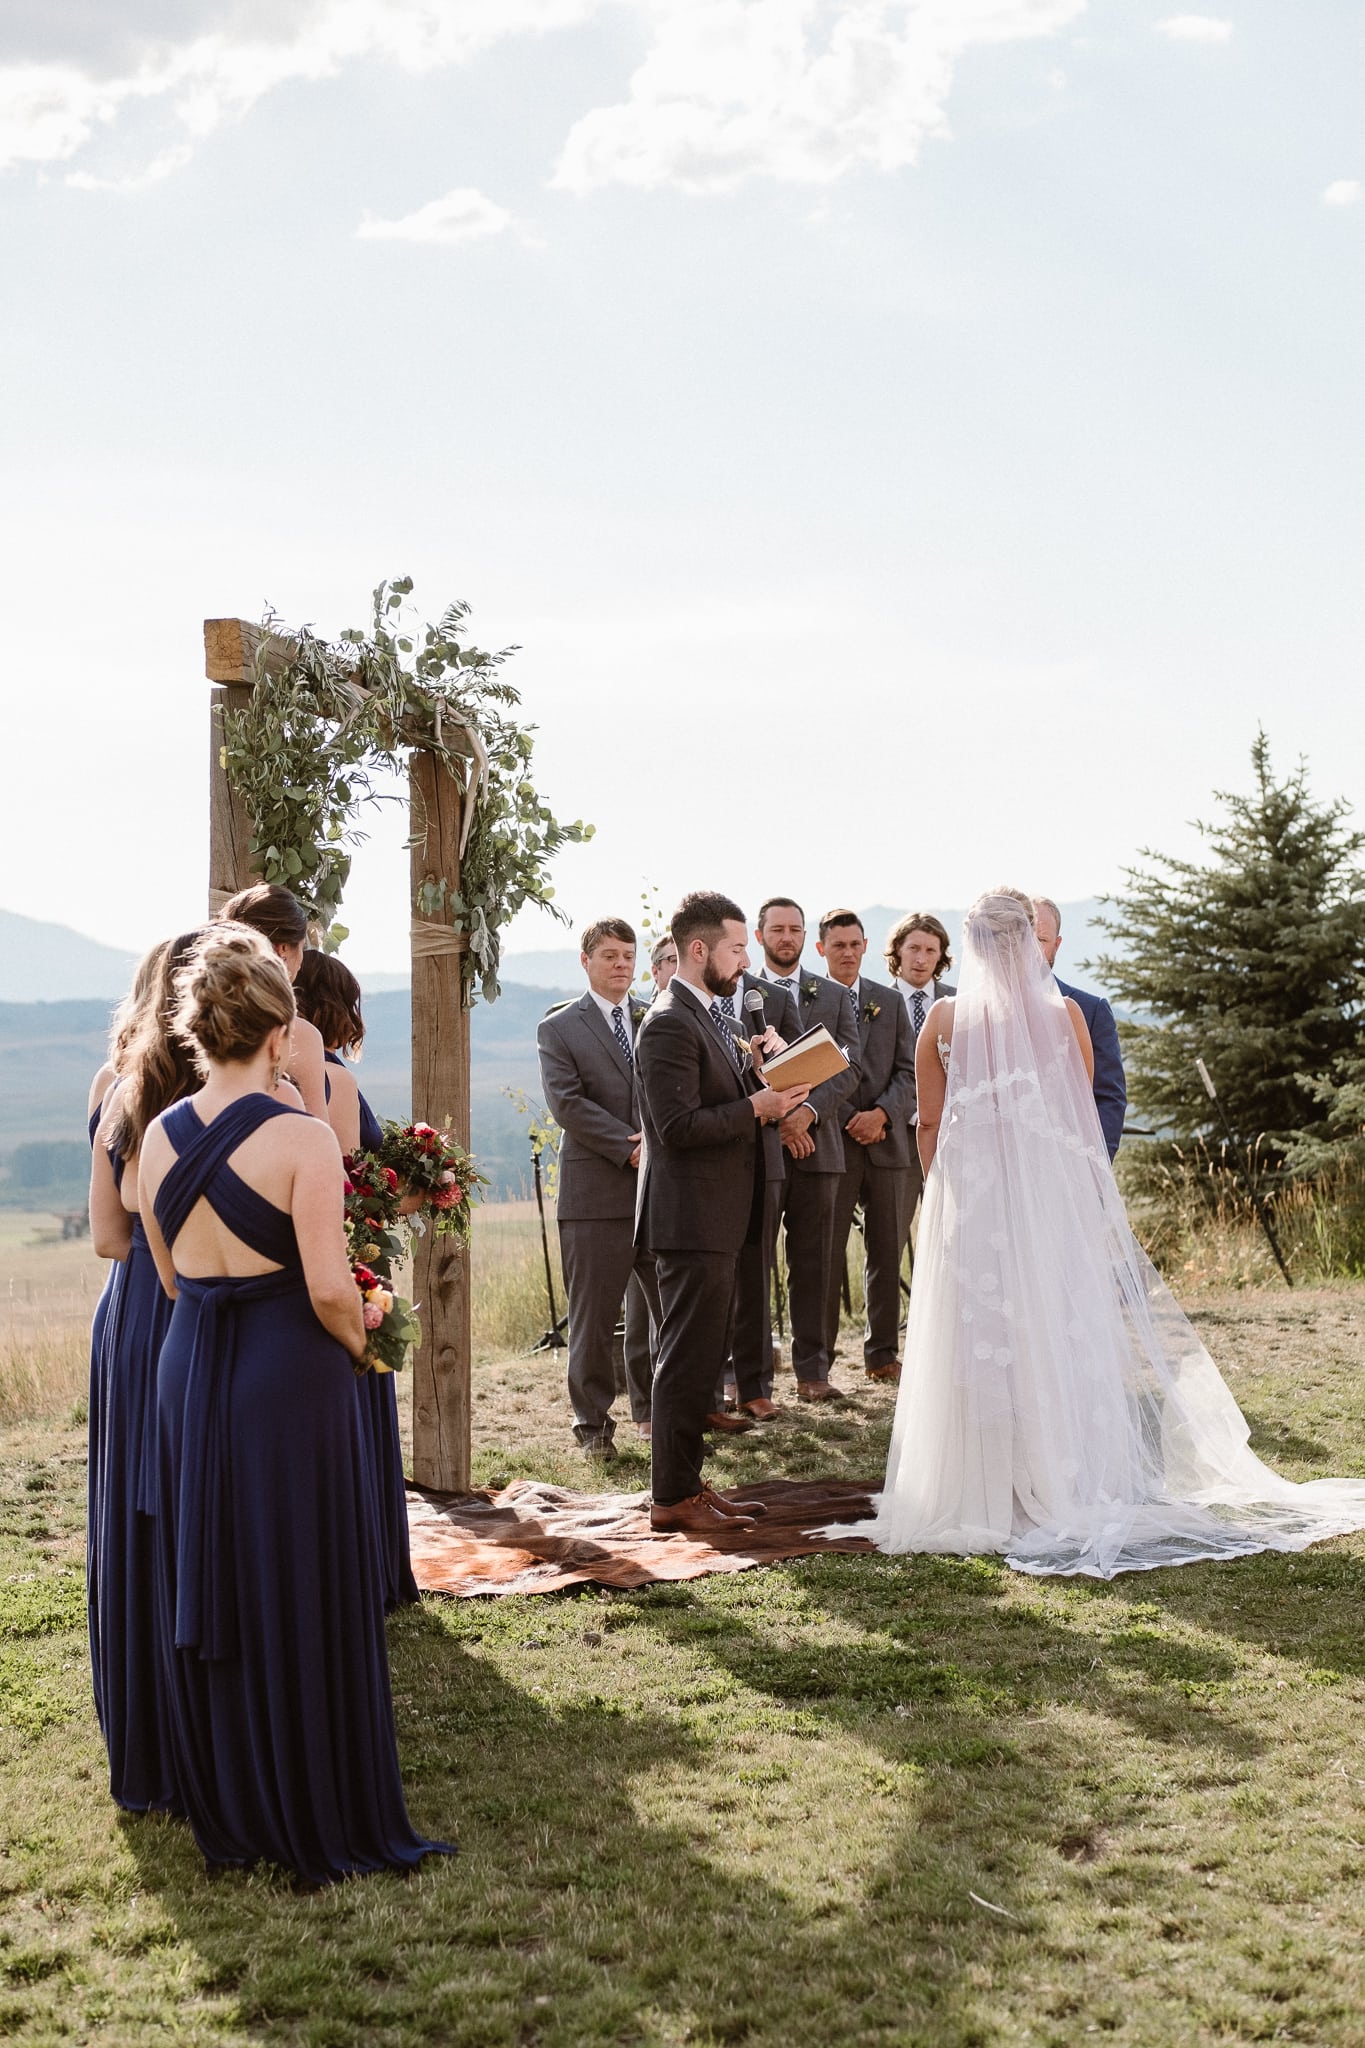 Steamboat Springs wedding photographer, La Joya Dulce wedding, Colorado ranch wedding venues, outdoor wedding ceremony, Colorado wedding, Rocky Mountain wedding, ranch wedding